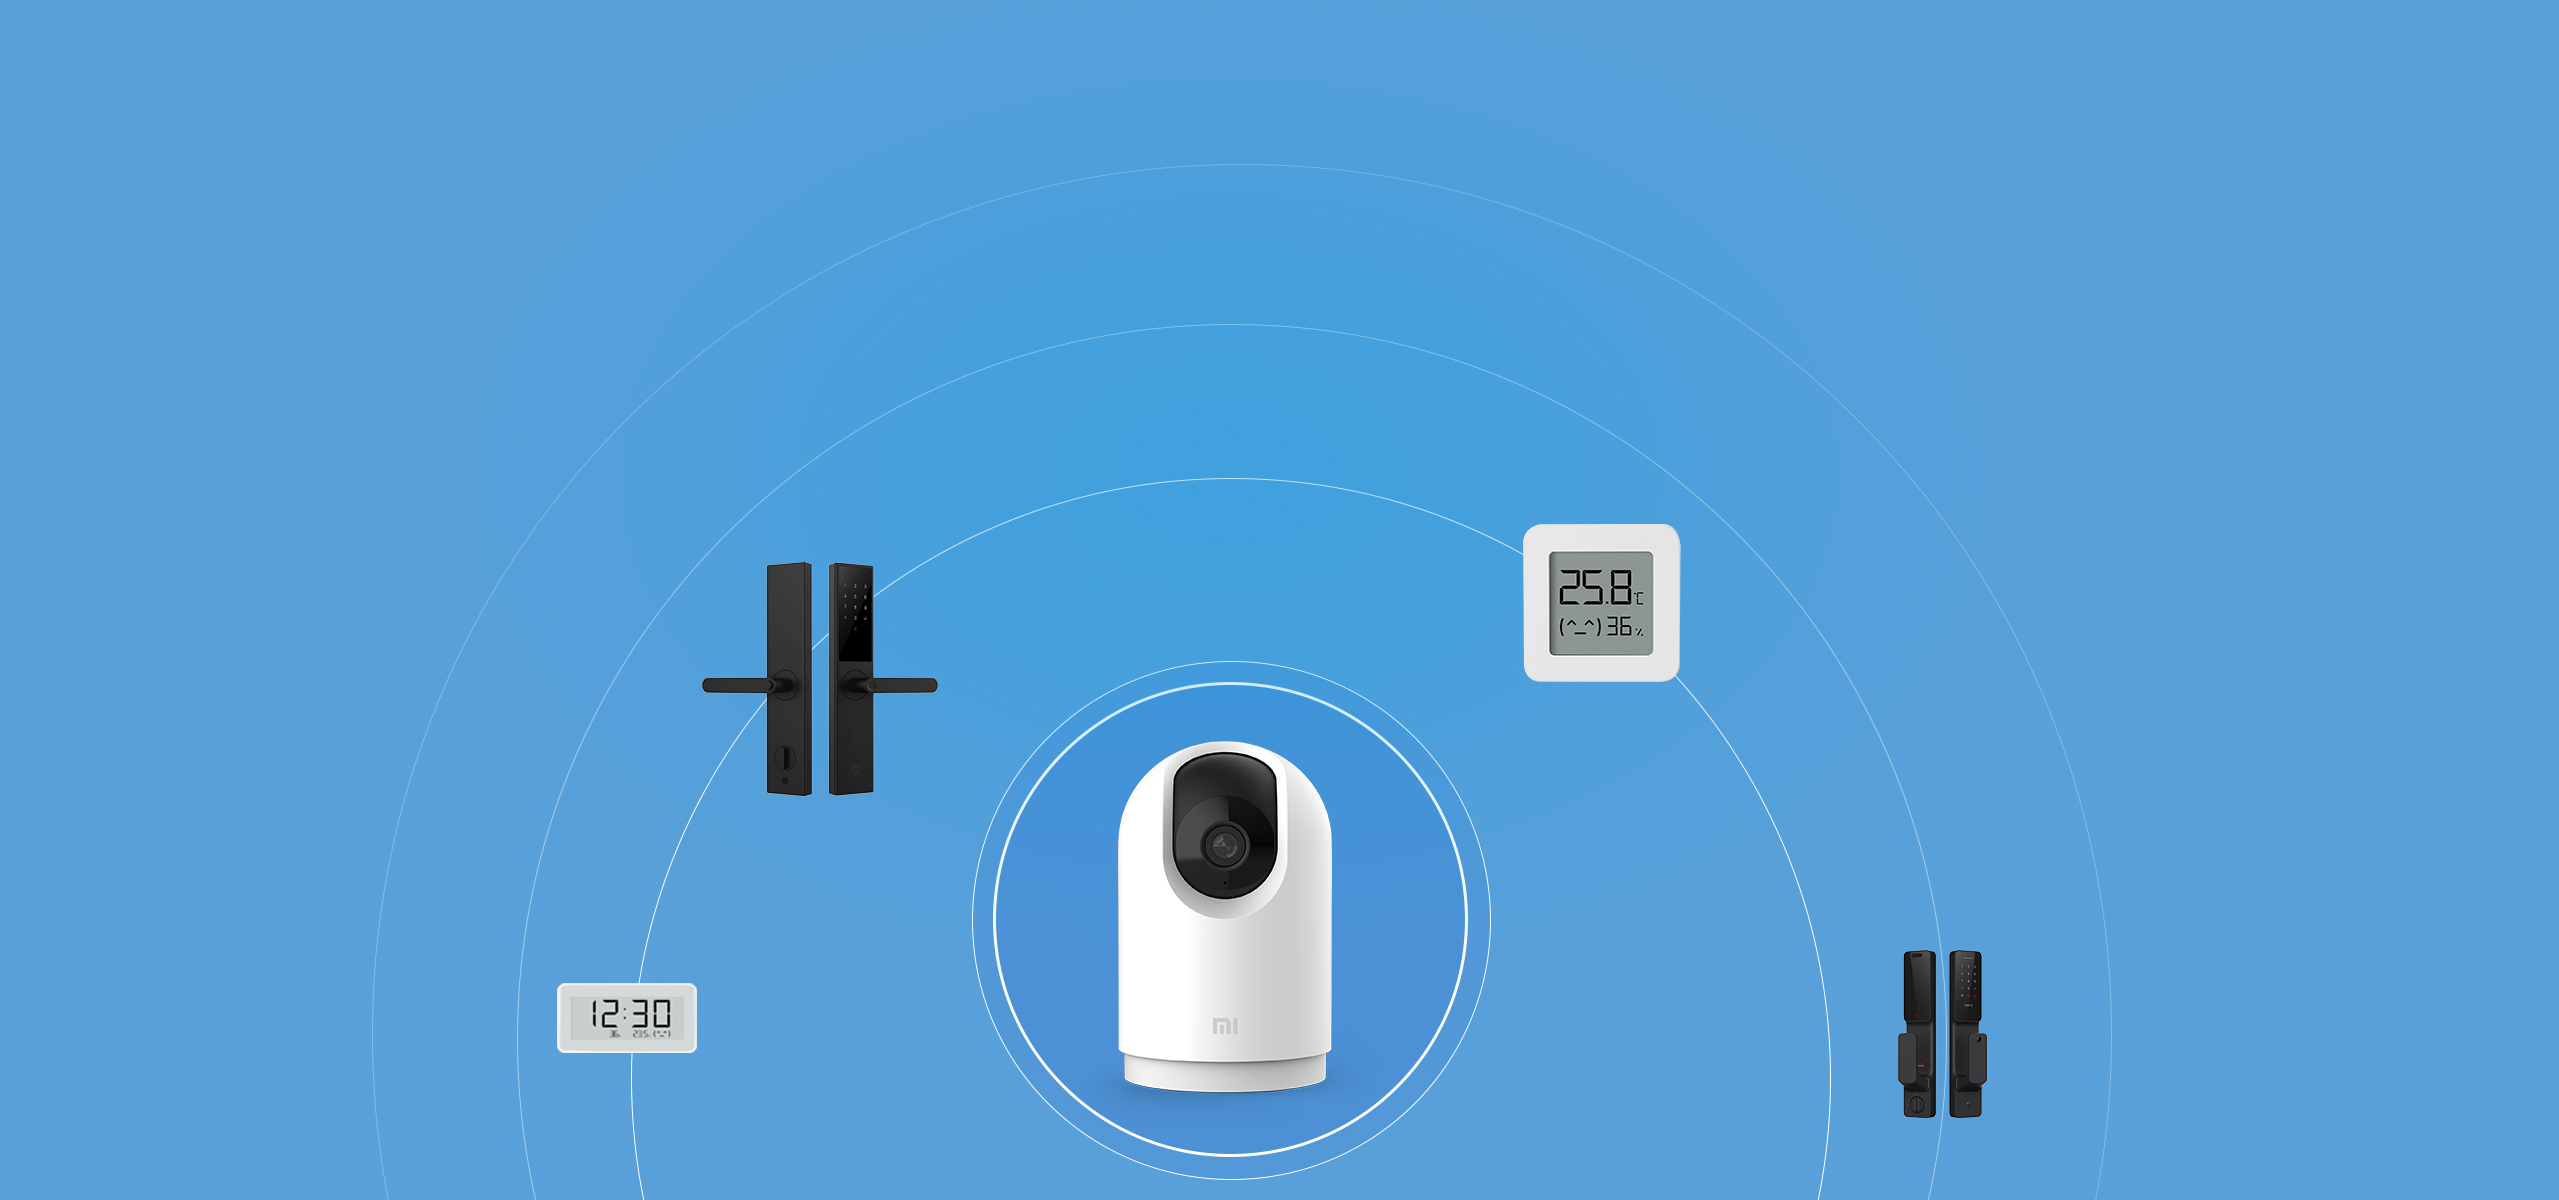 Xiaomi-360-Degree-Home-Security-Camera-2K-Pro-Image-10